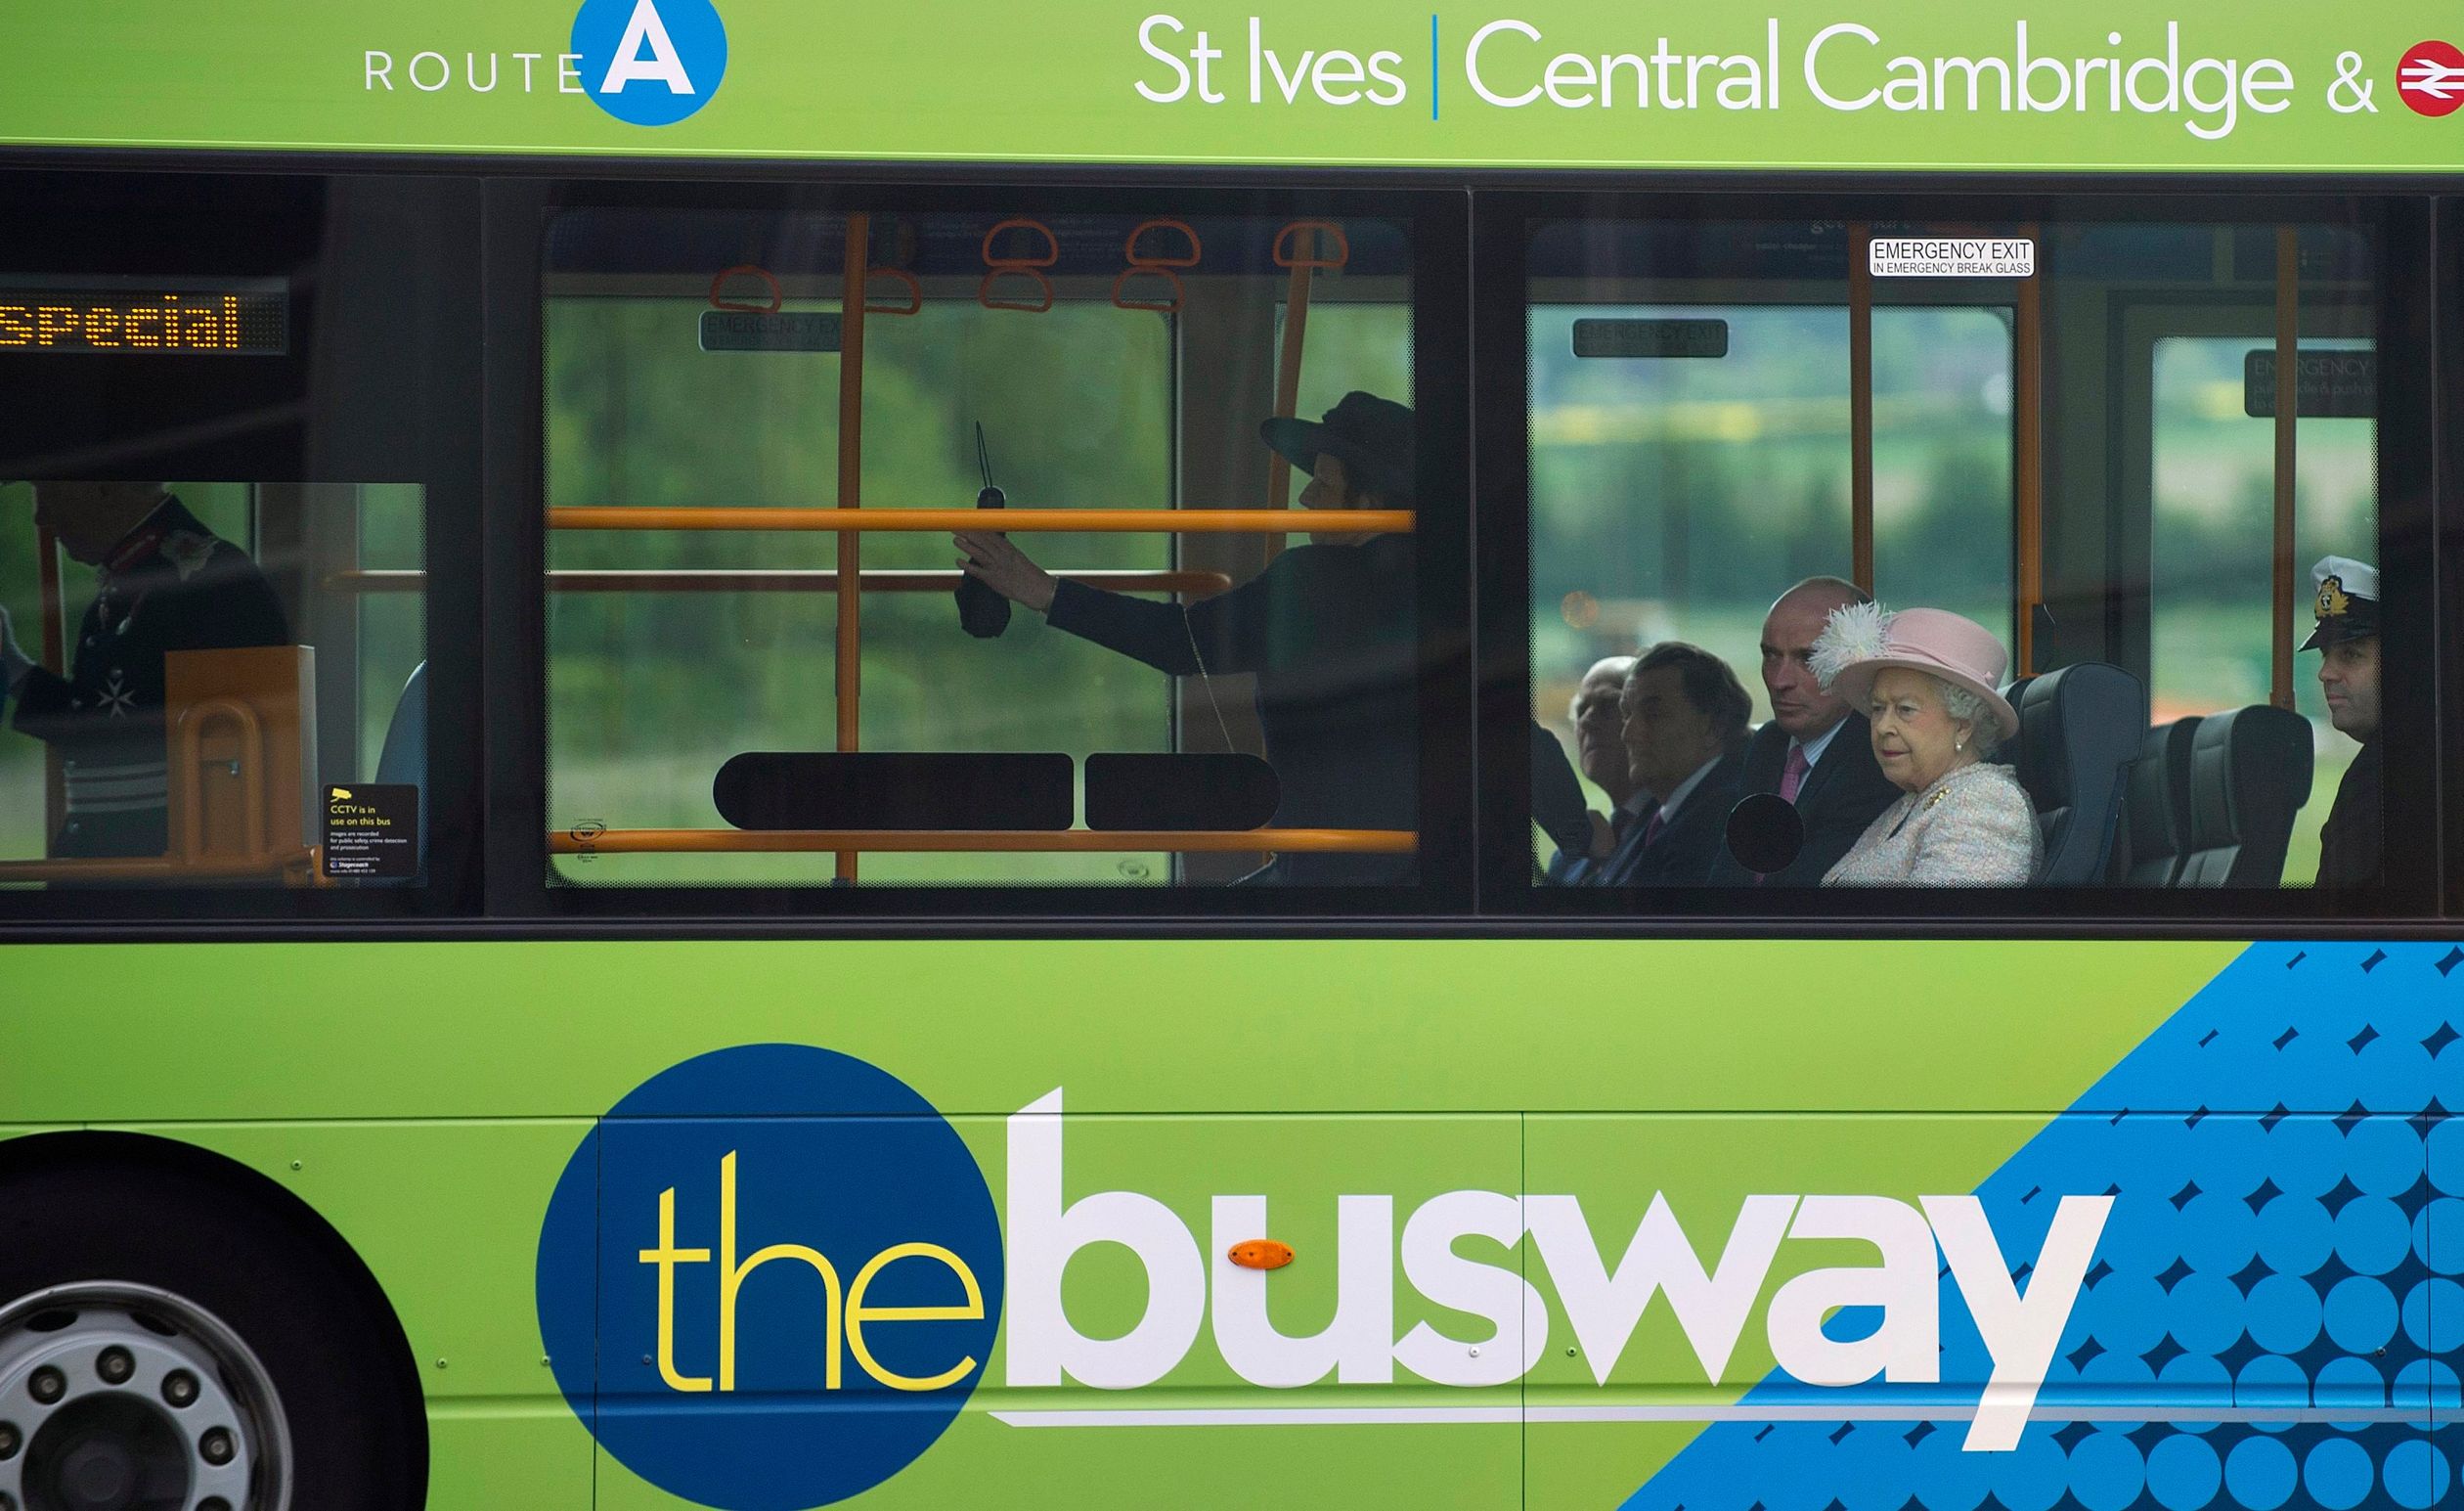 2013: Koningin Elizabeth pakt de bus.